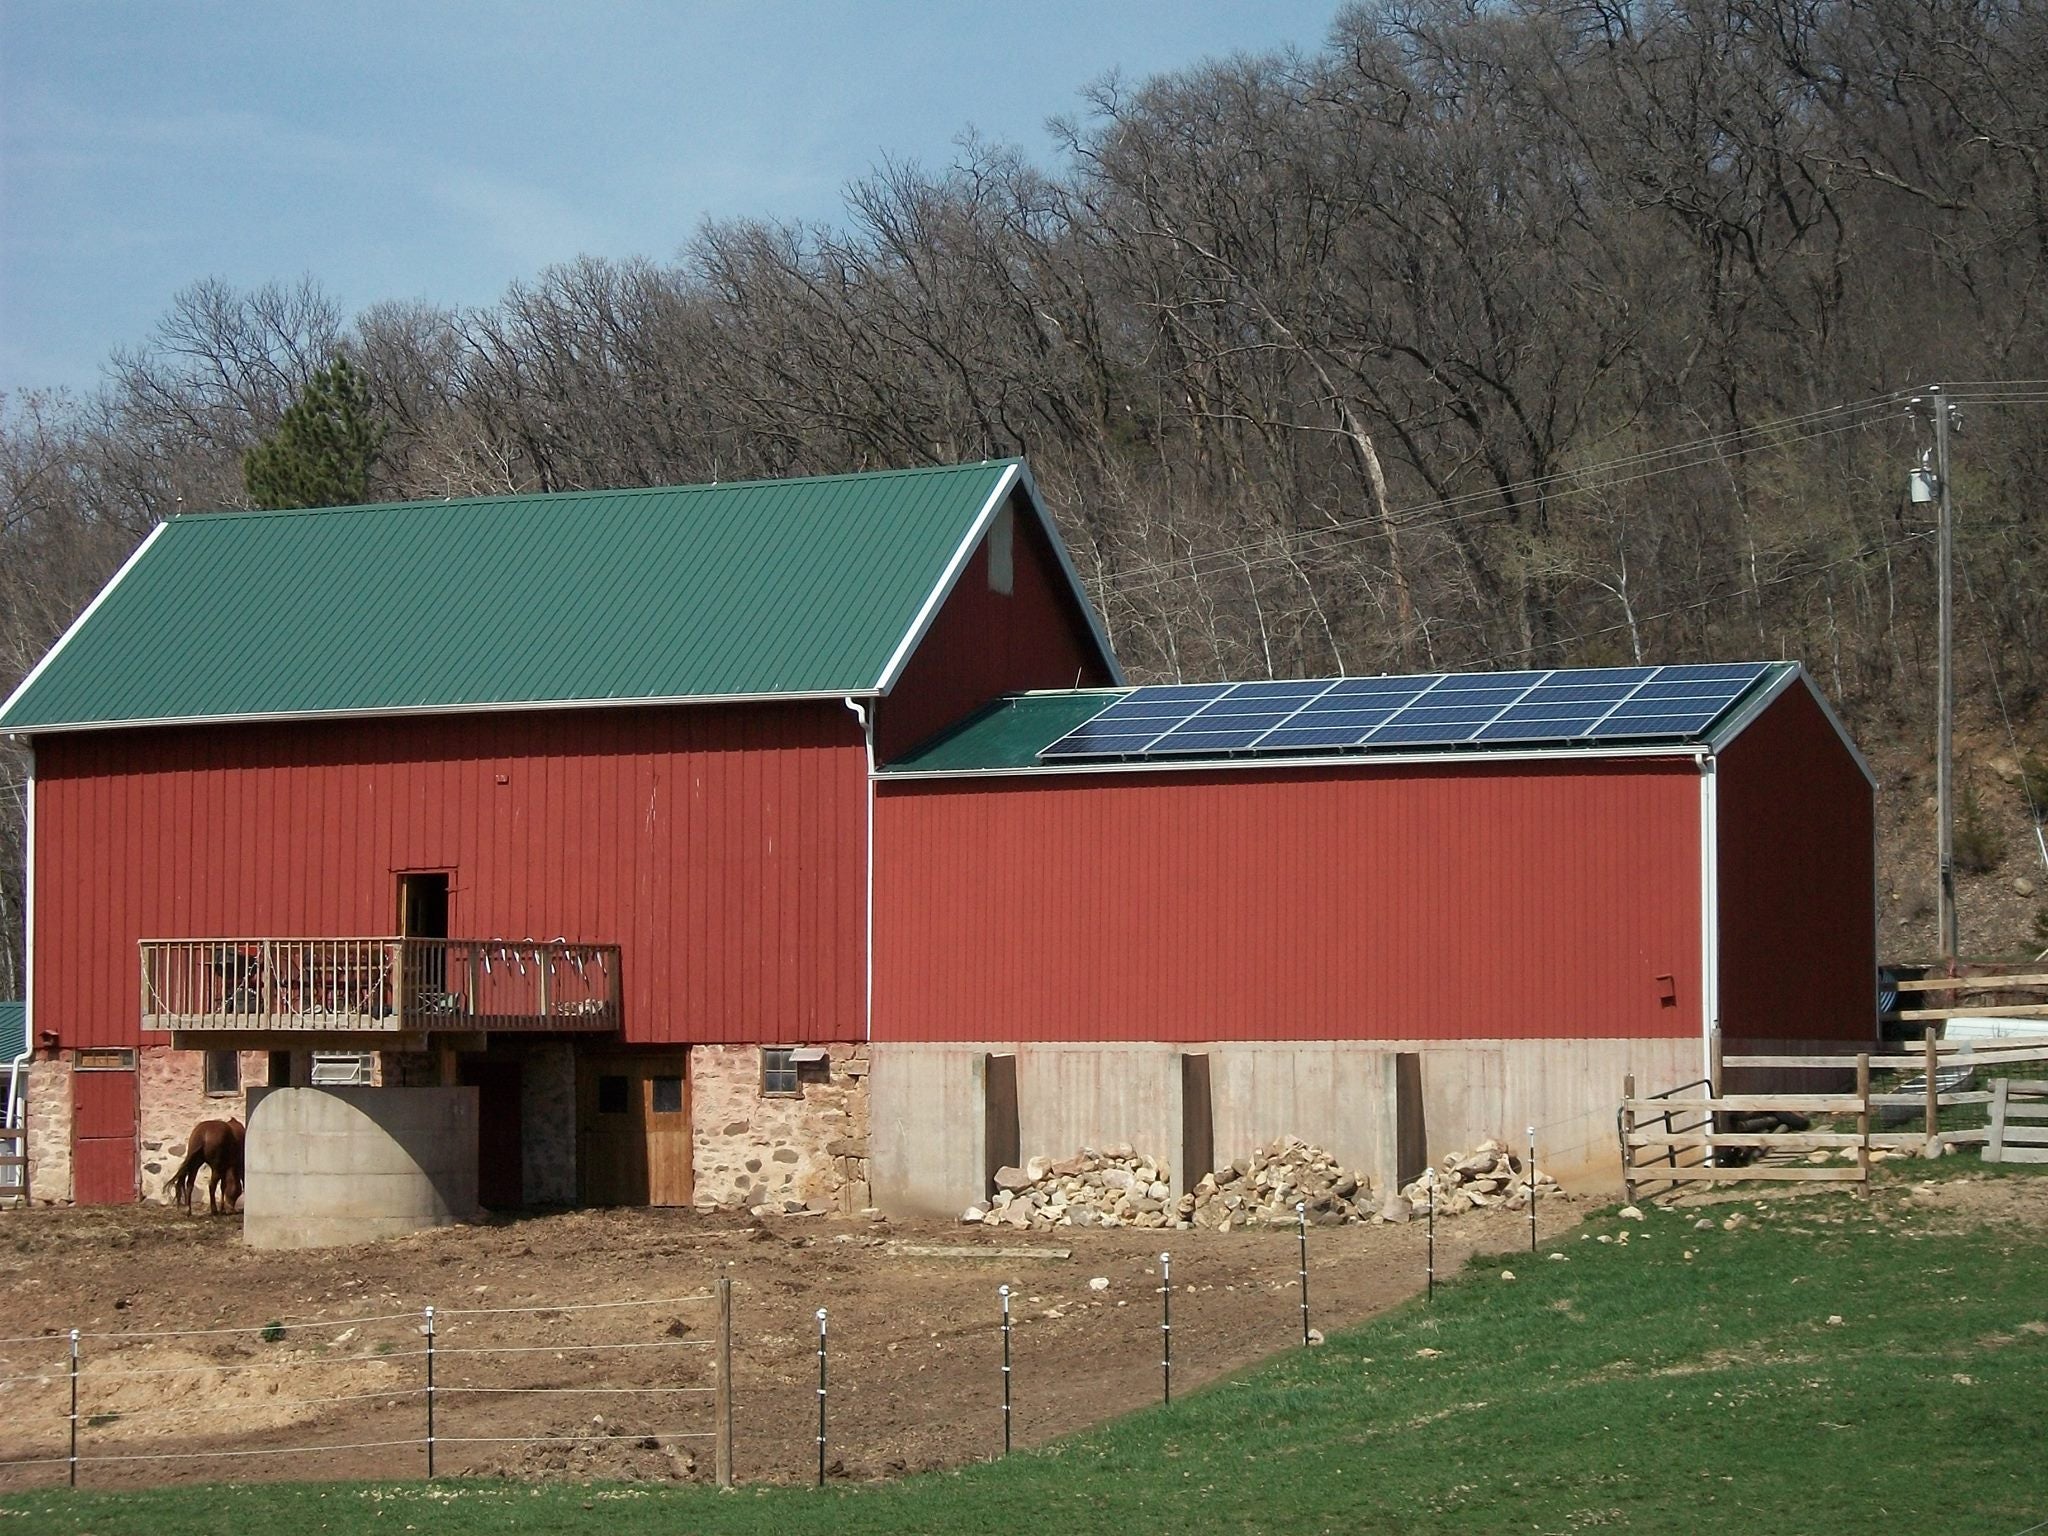 Solar PV array